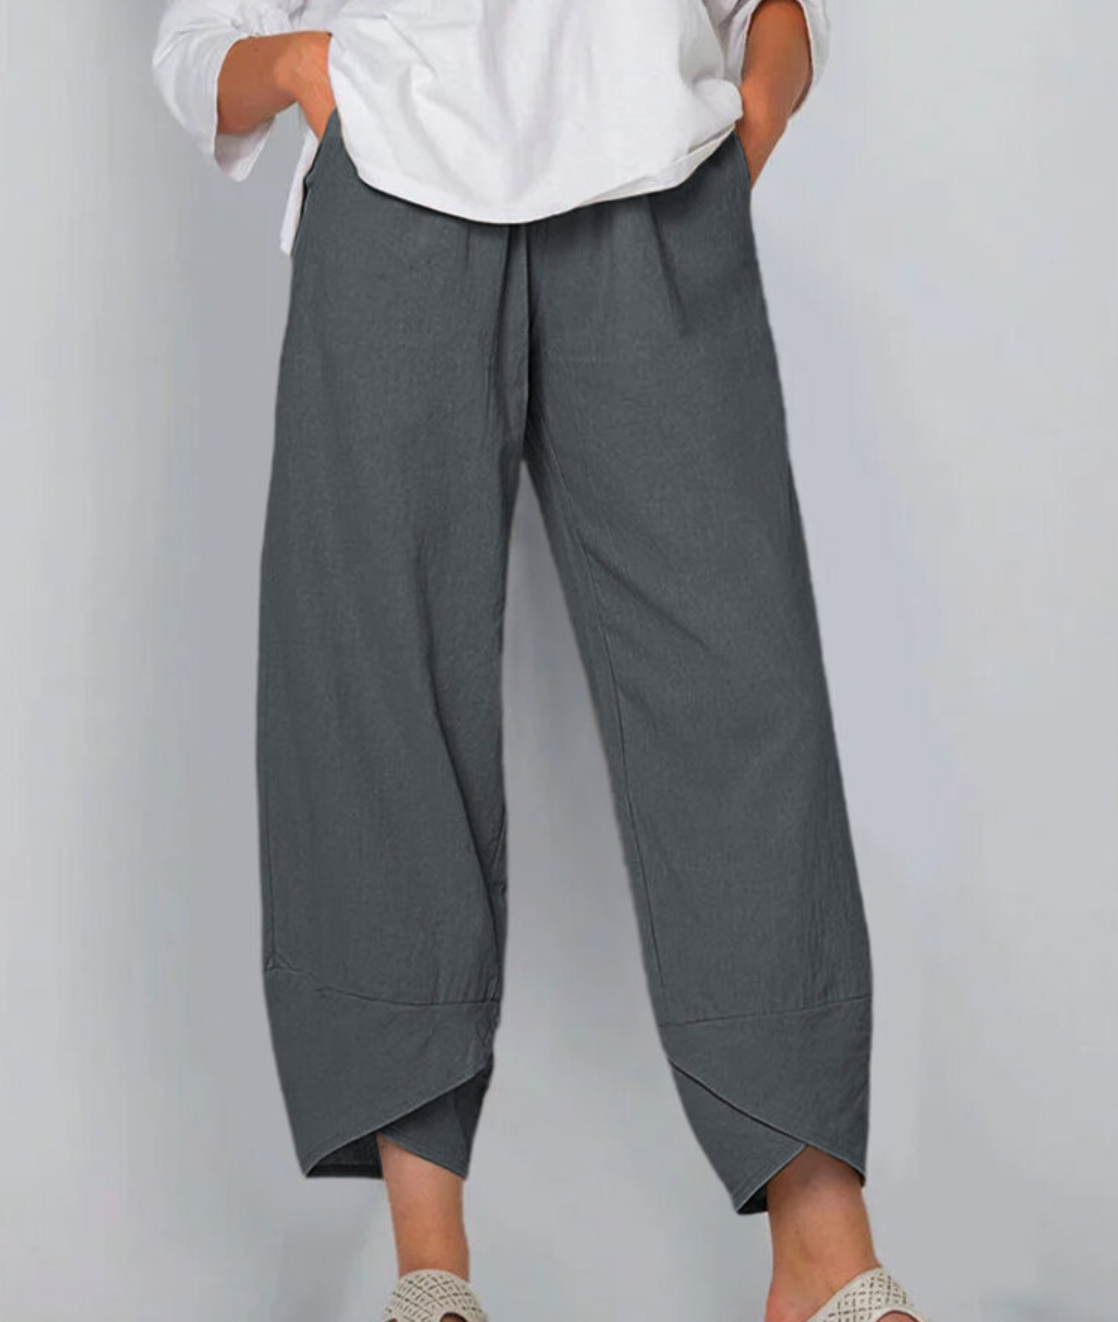 FIANA - Stylish and unique pants